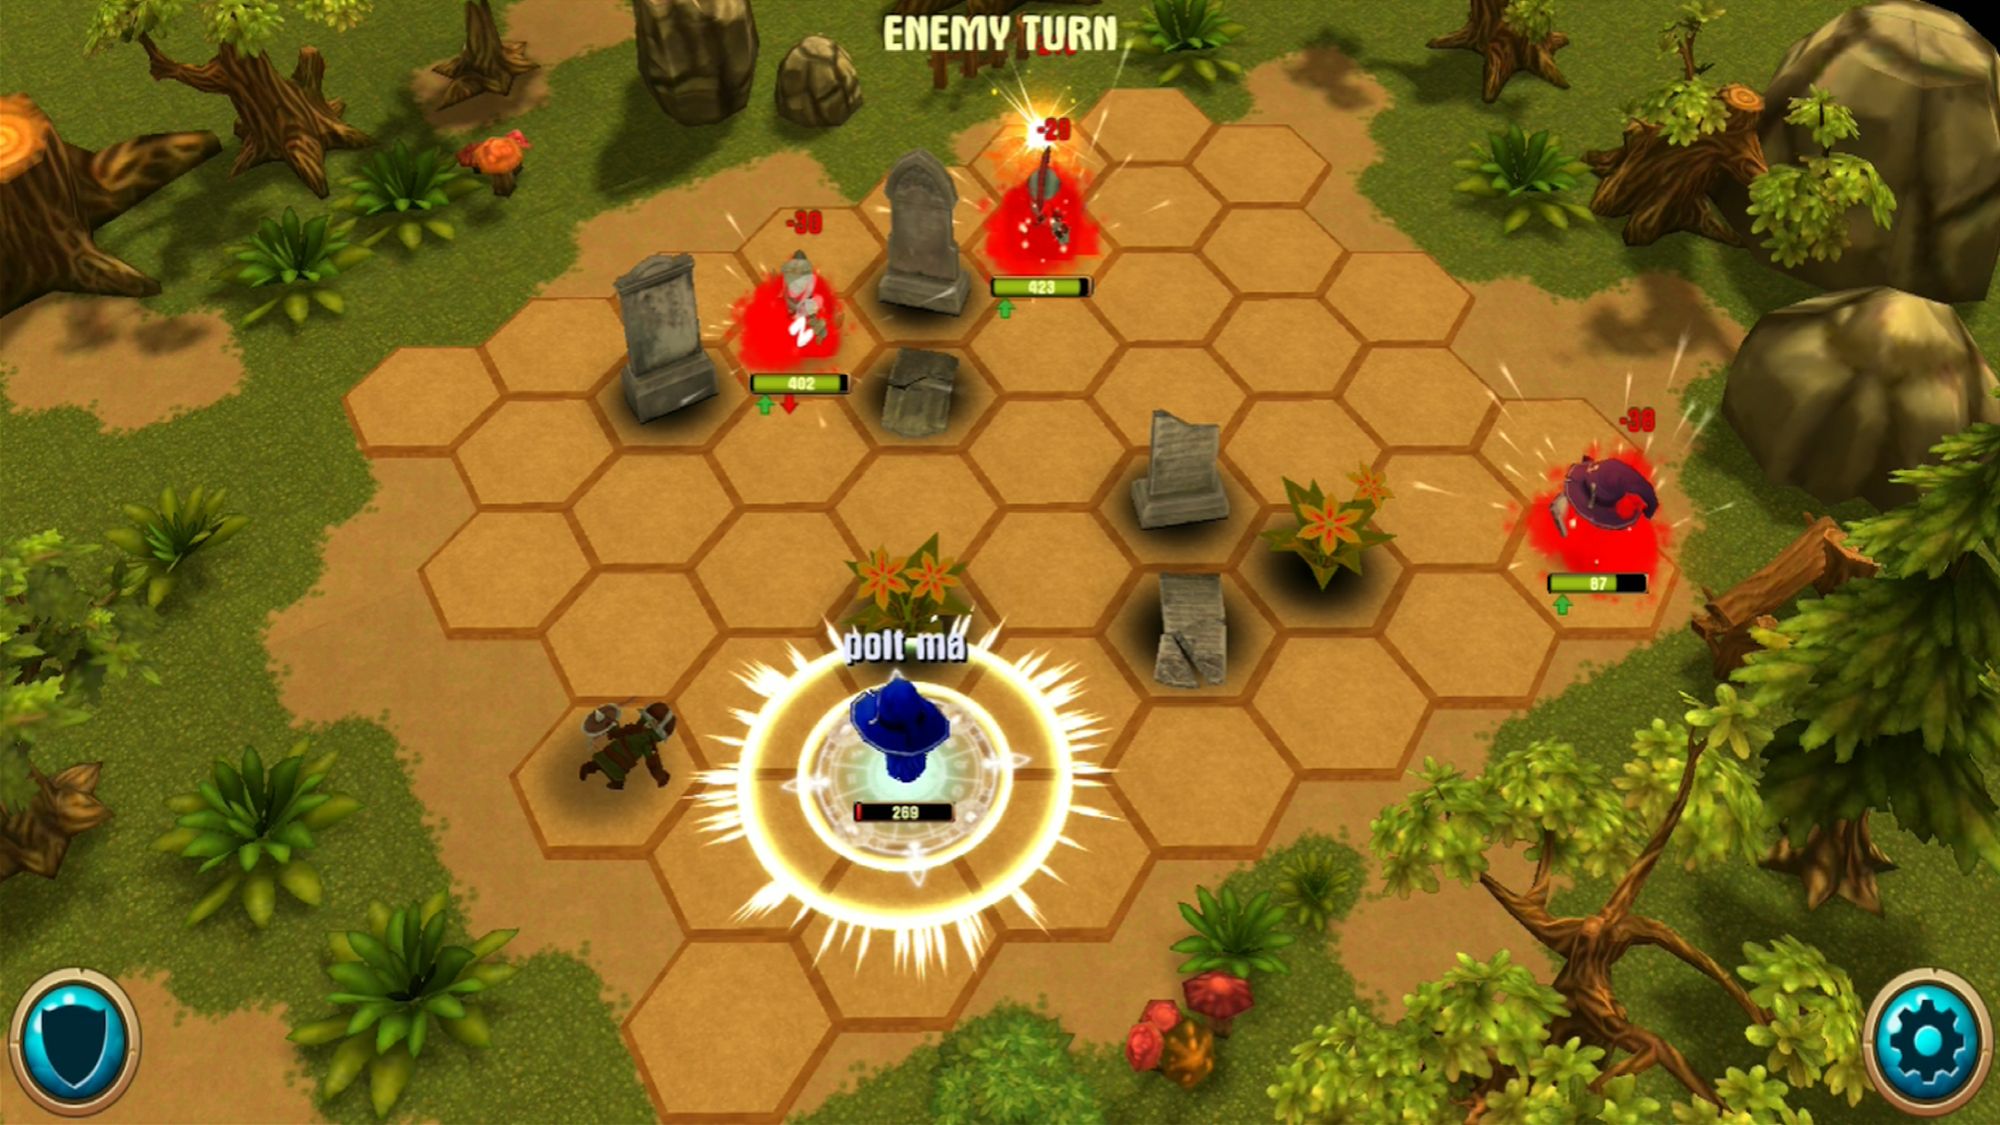 Kings Hero 2: Turn Based RPG for Android